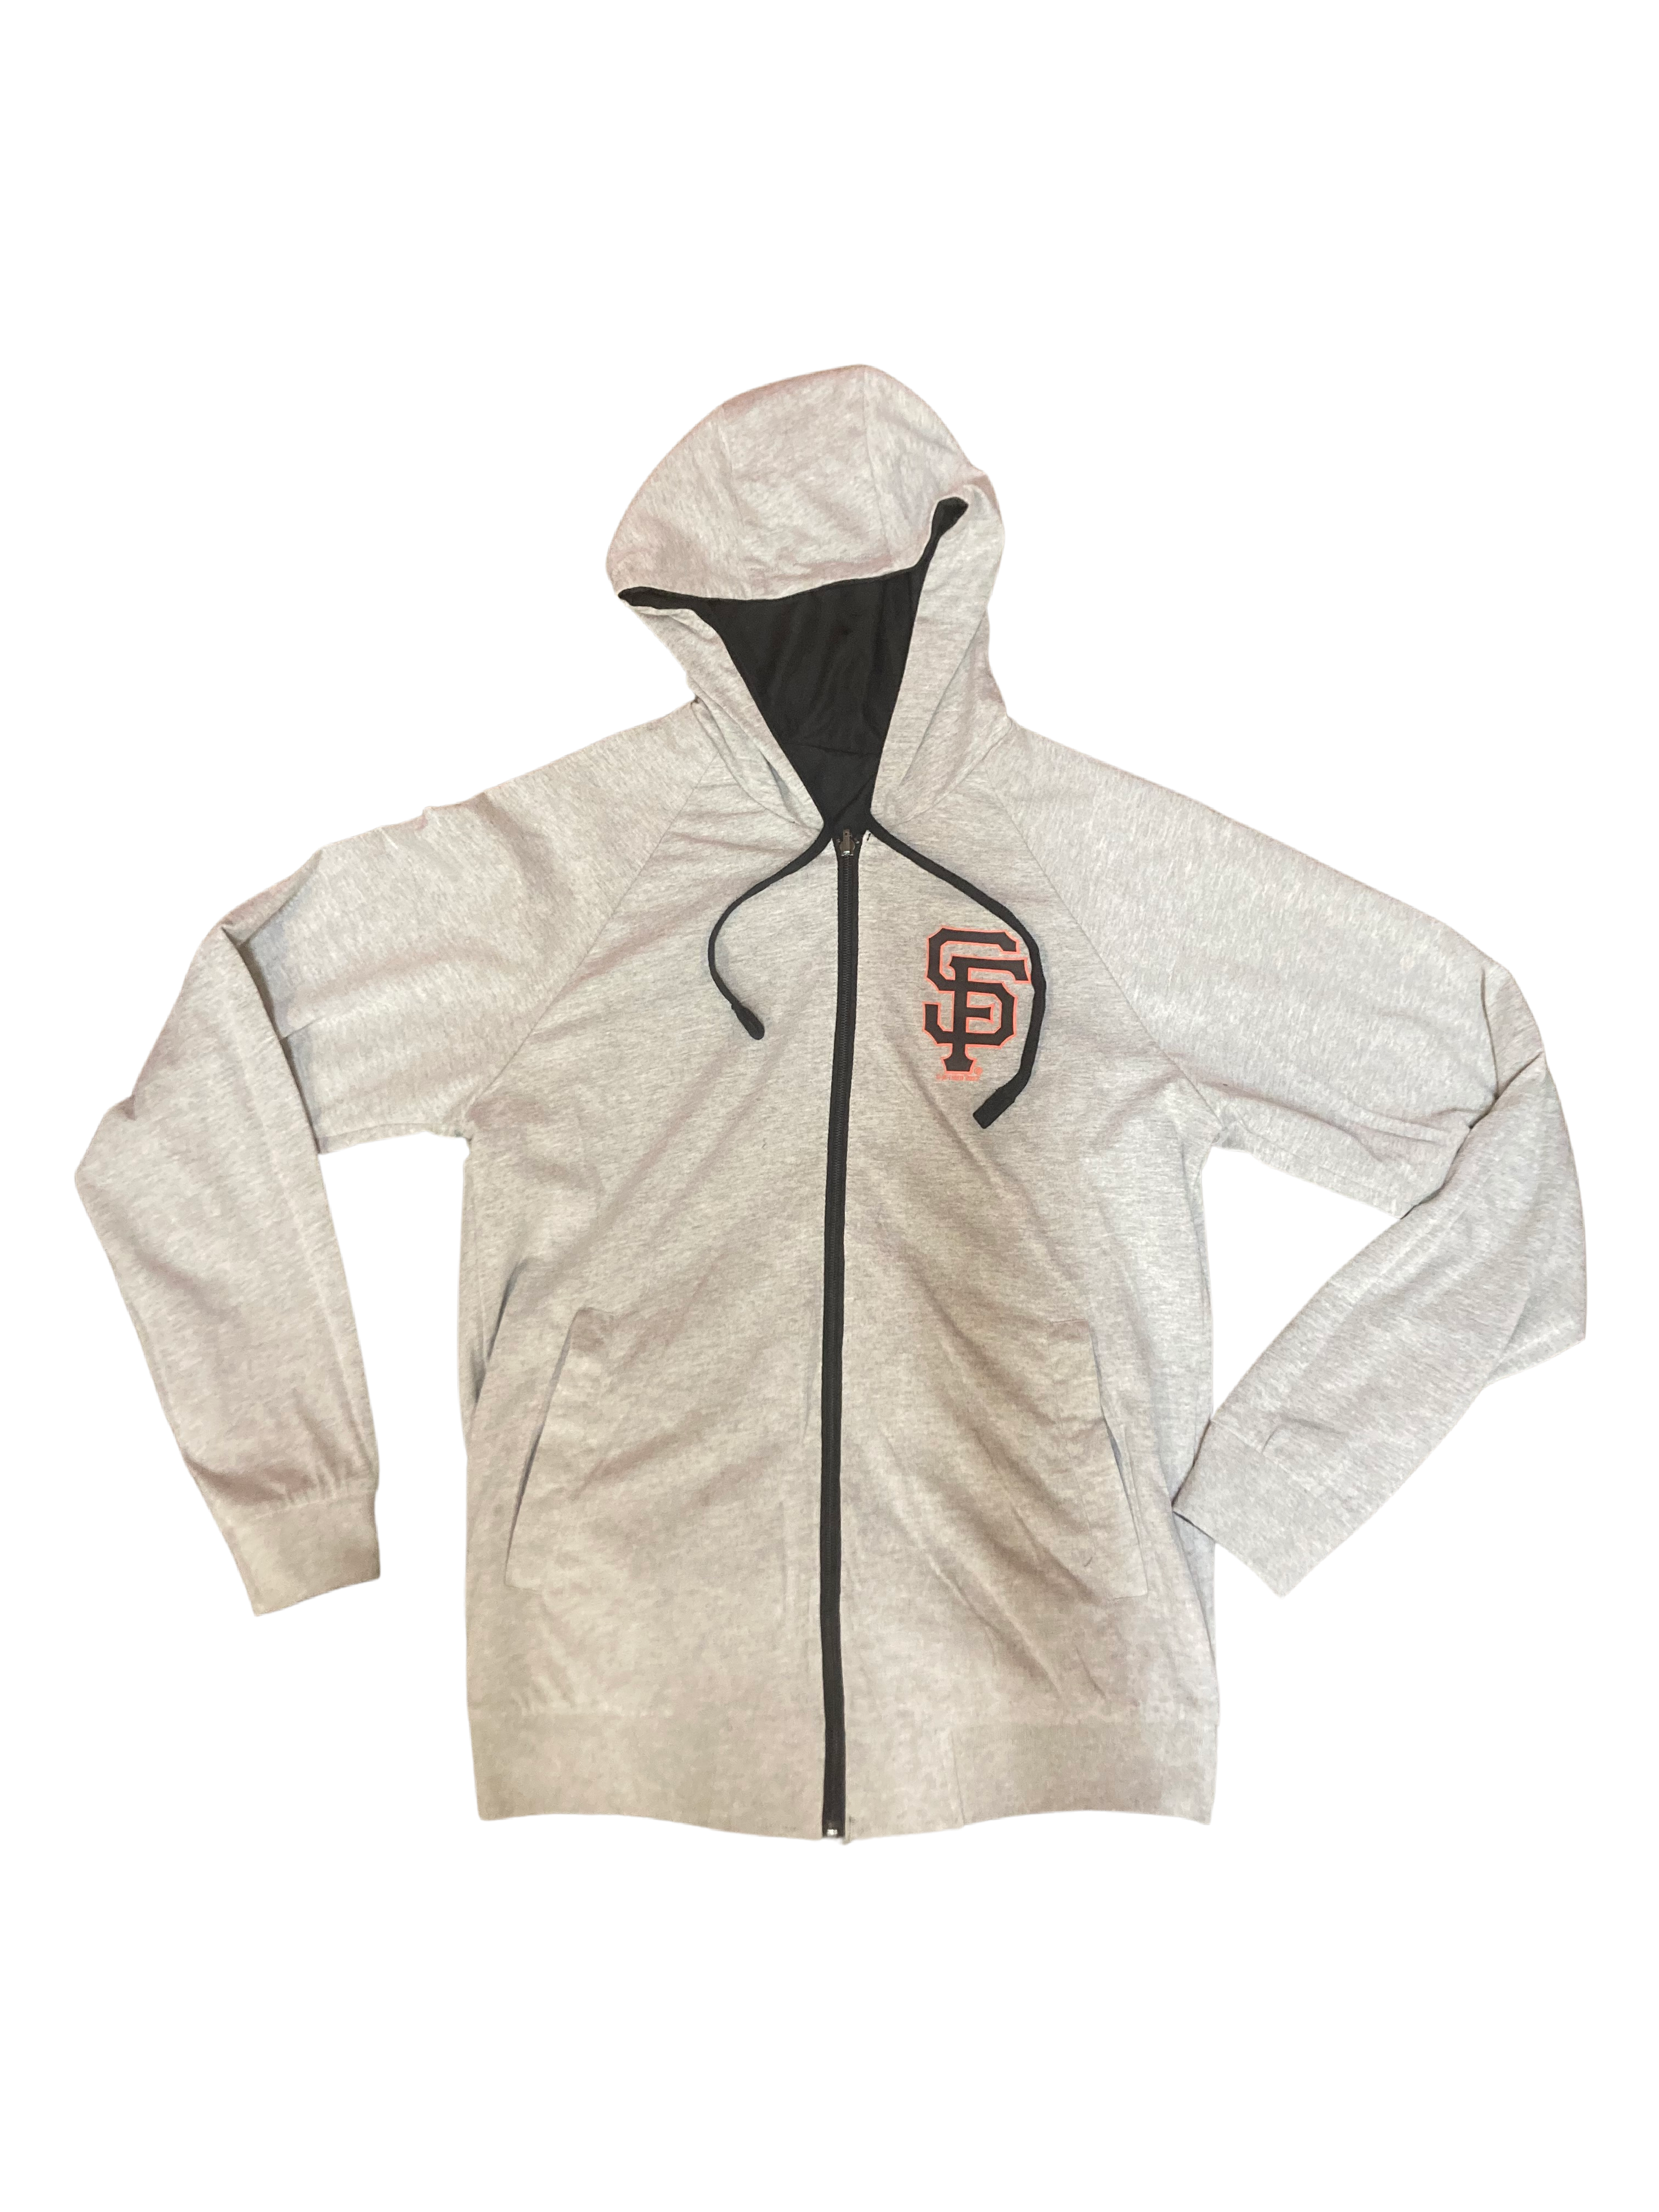 GIII San Francisco Giants Wild Pitch Full Zip Reversible Jacket